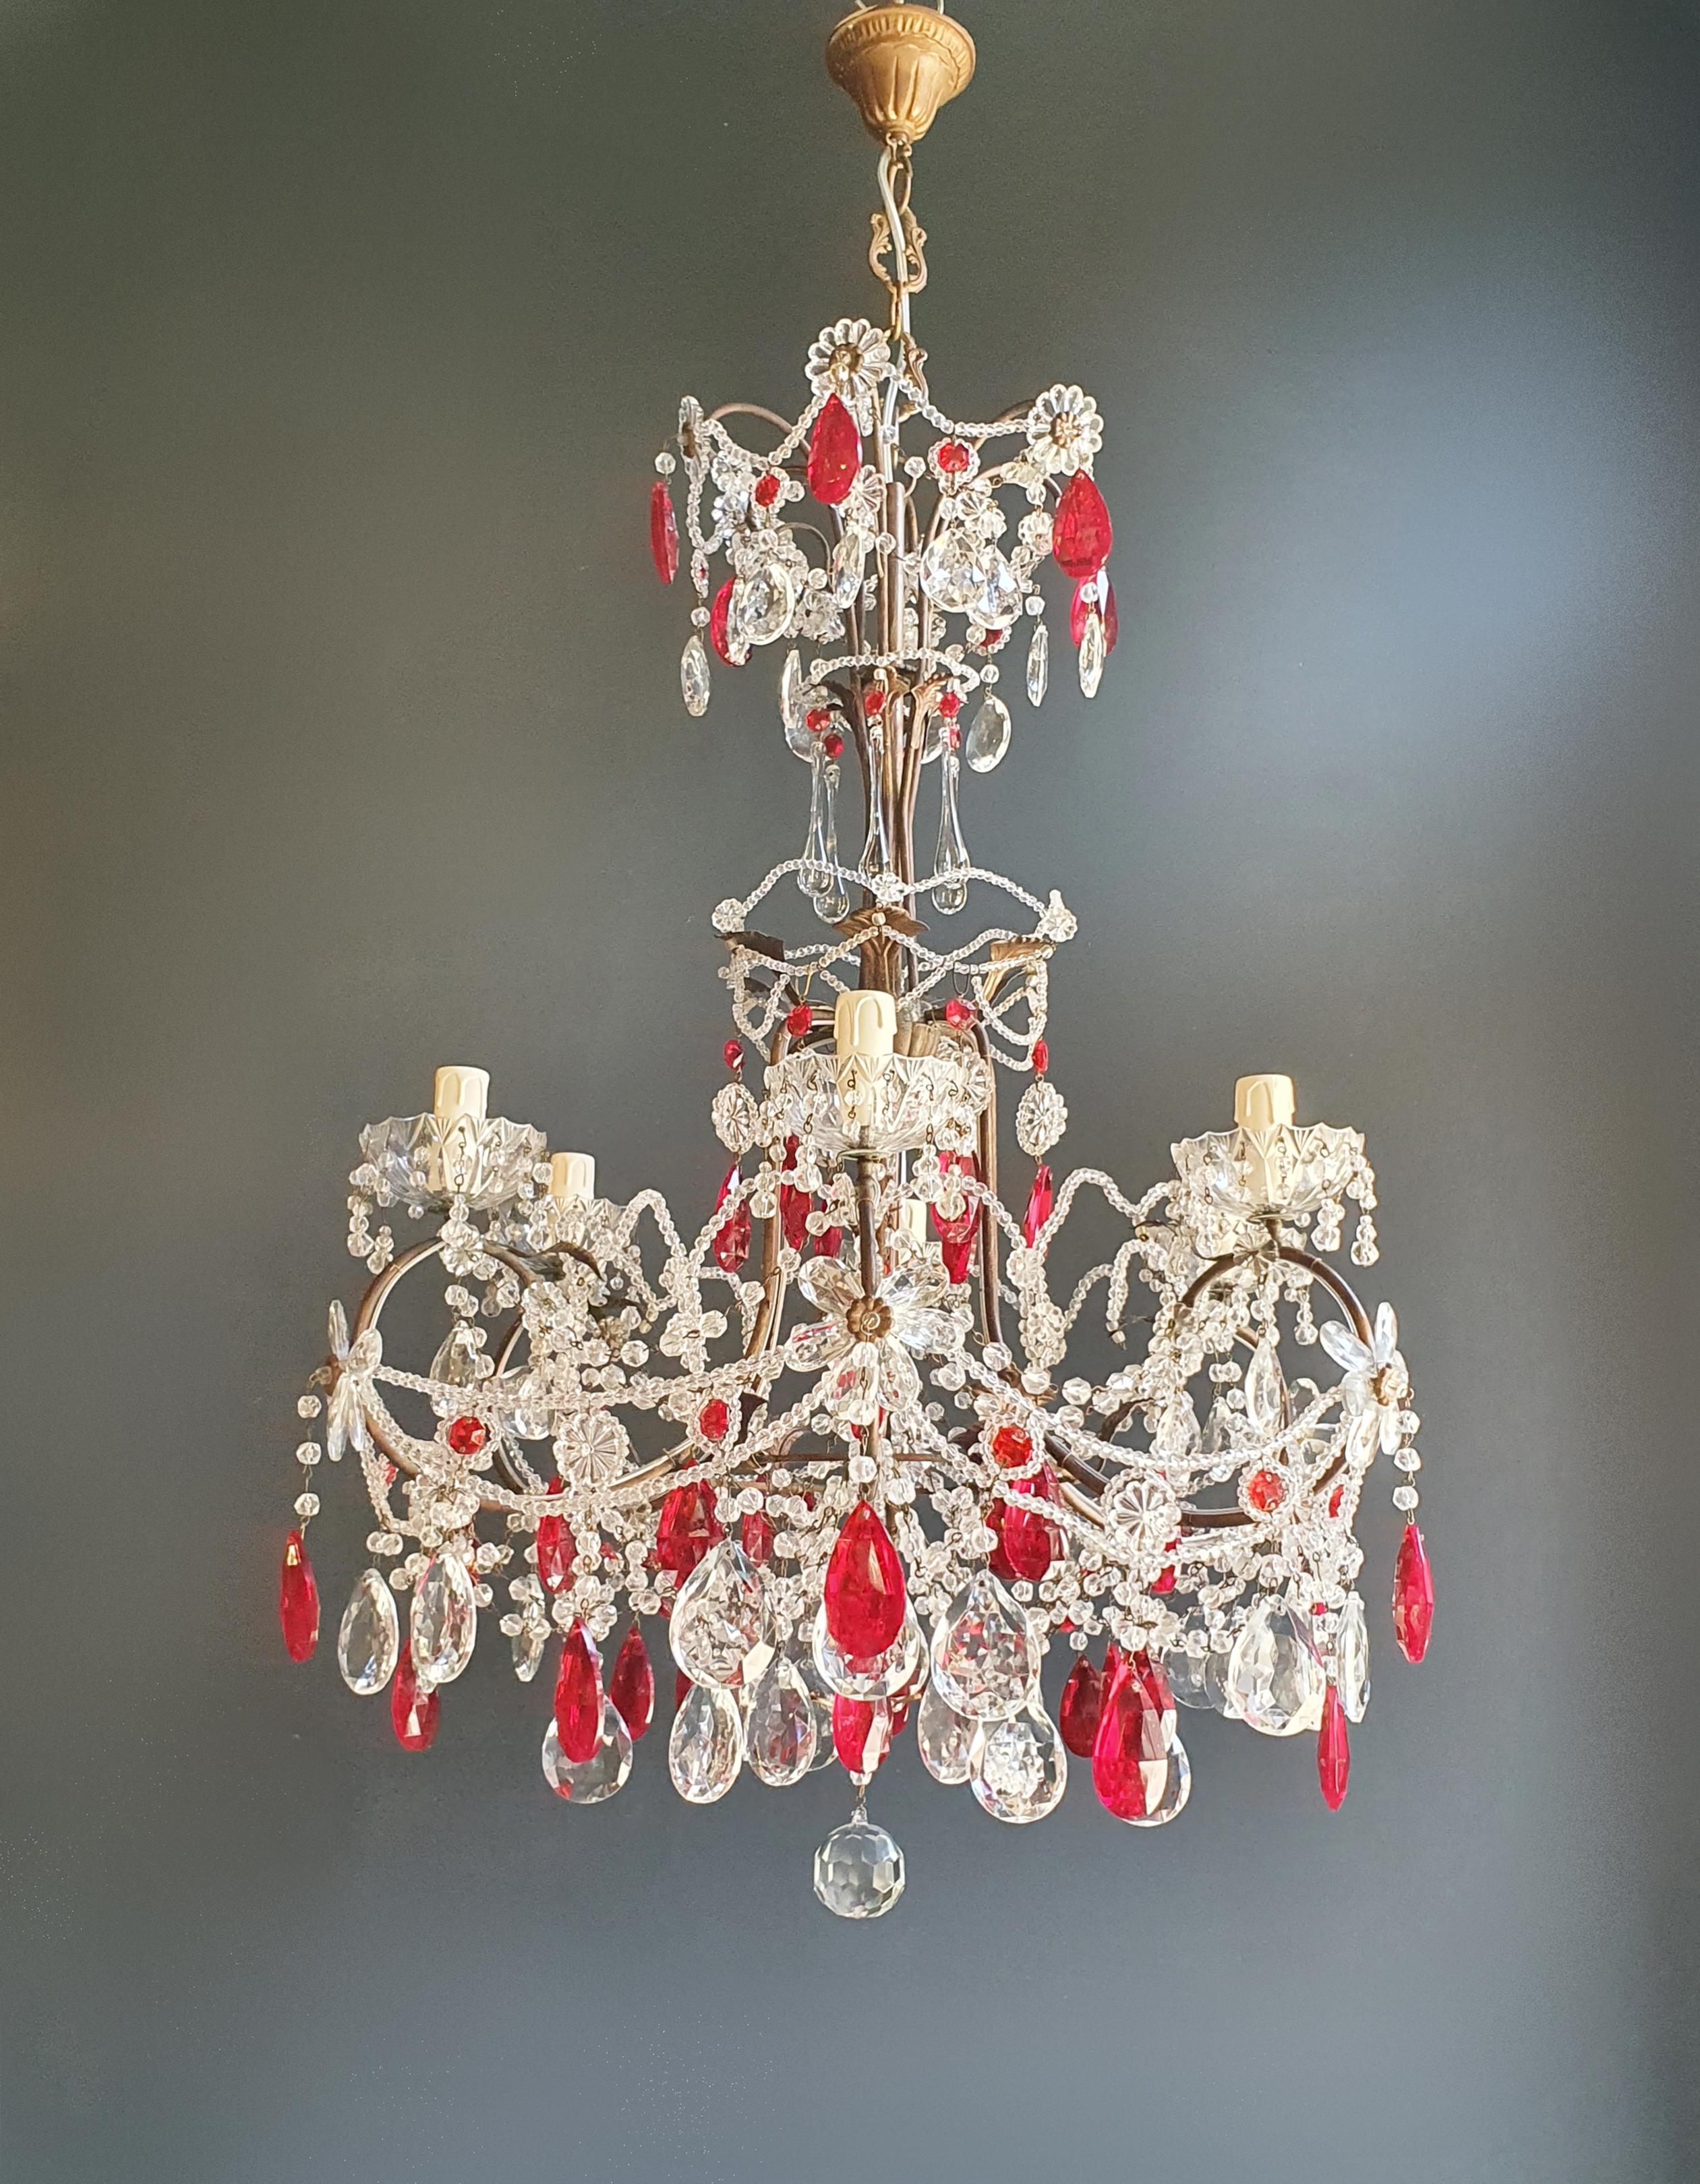 Red Crystal Chandelier Antique Brass Ceiling Lamp Lustre Art Nouveau Beaded 1